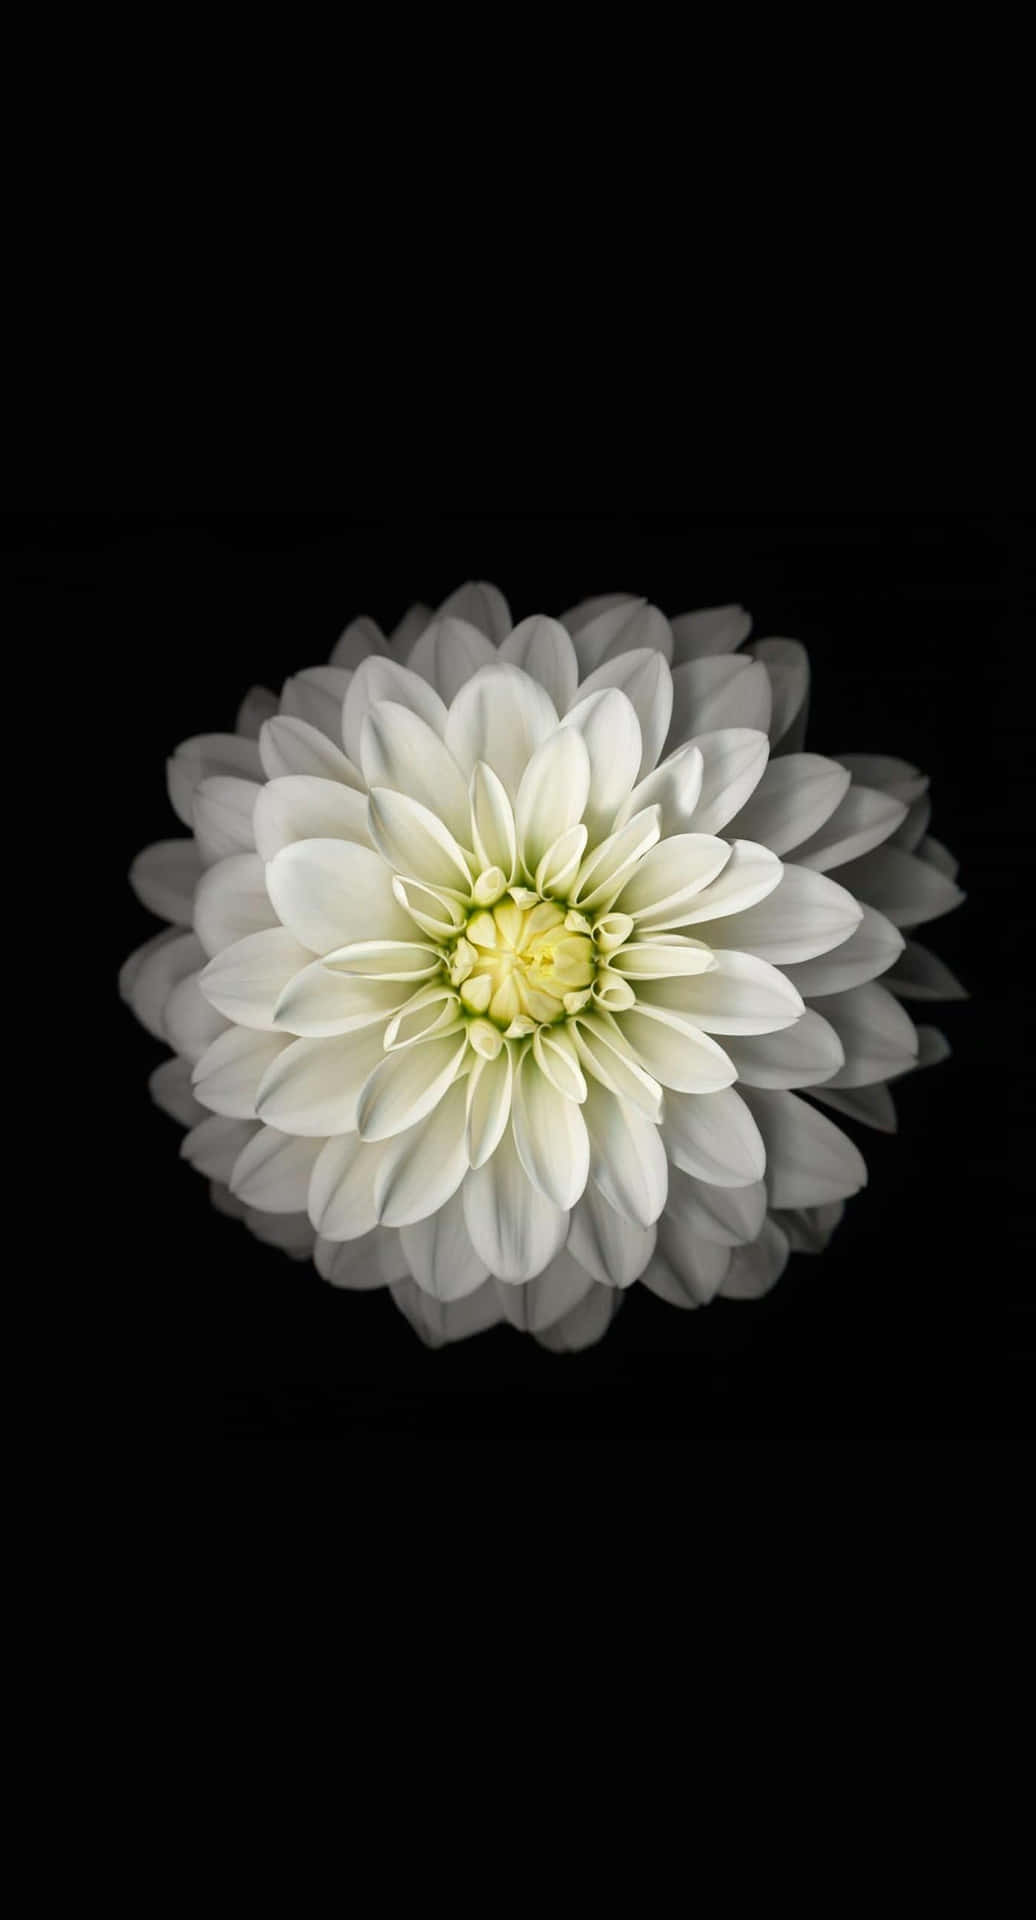 Download Flower Iphone White Dahlia Pinnata Picture